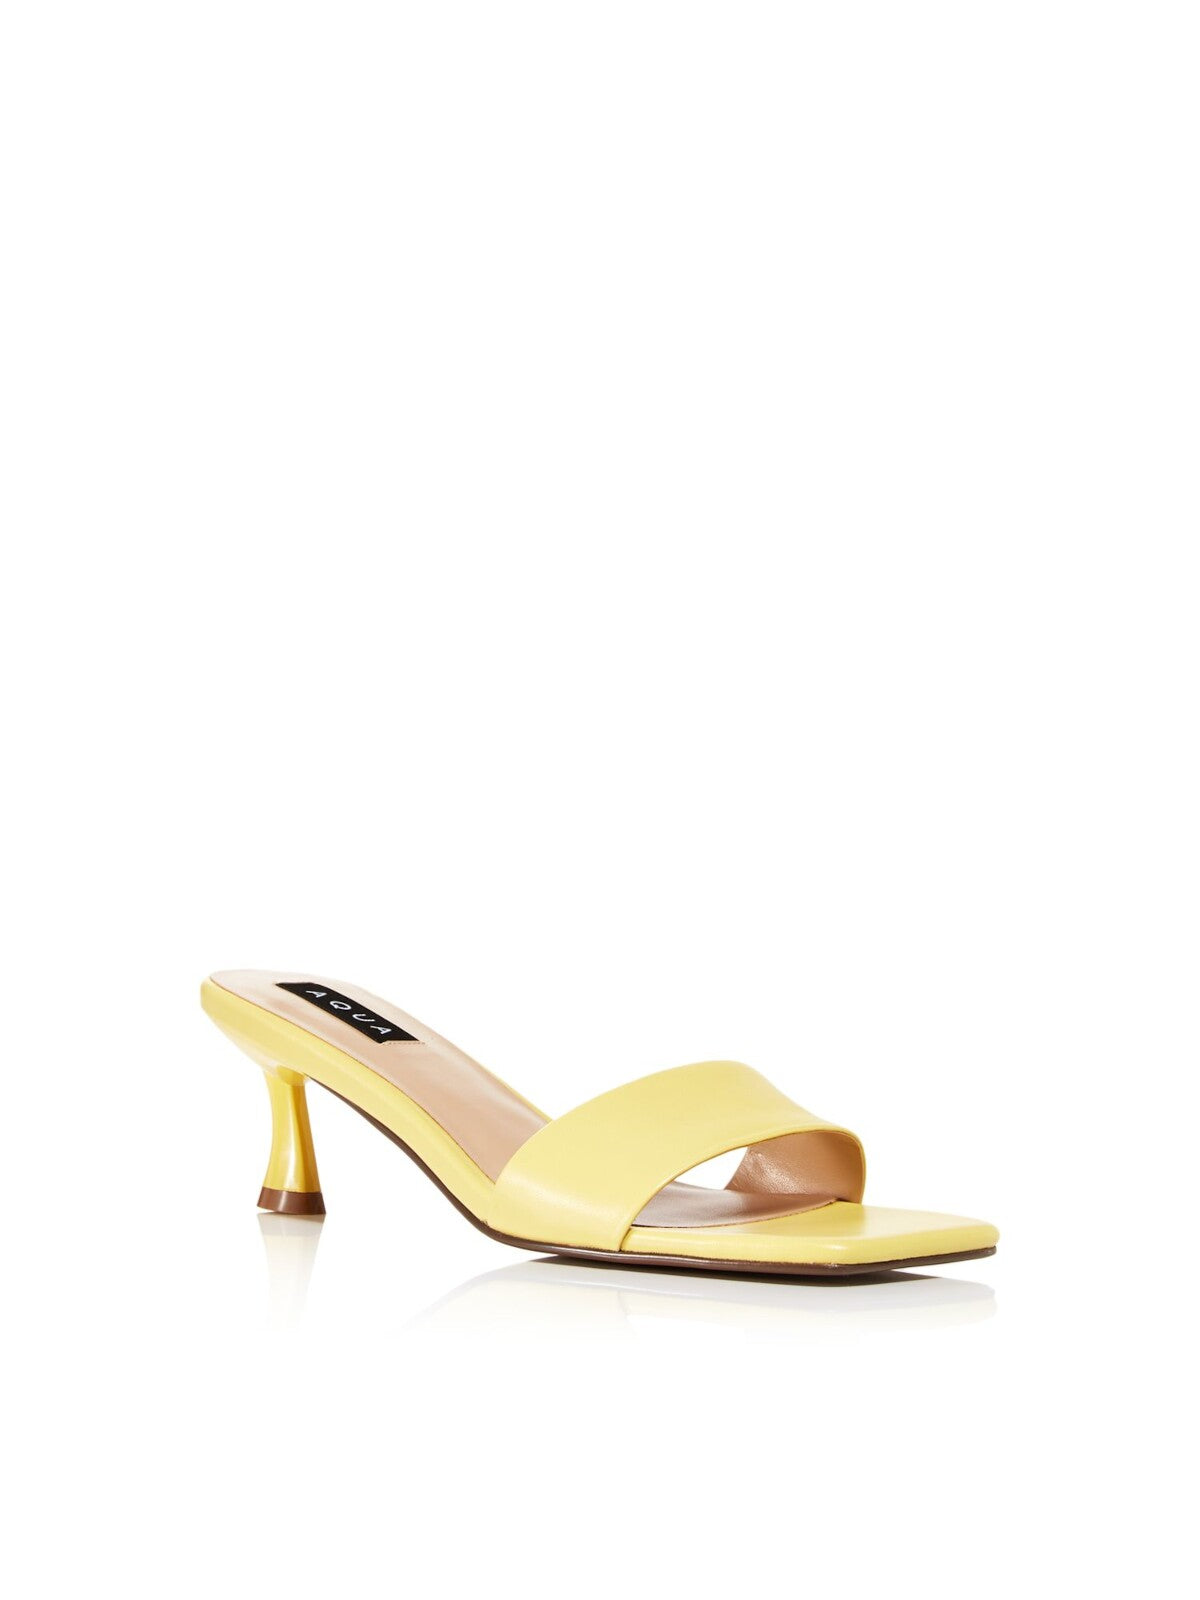 AQUA Womens Yellow Padded Day Square Toe Kitten Heel Slip On Leather Dress Sandals Shoes 9 M